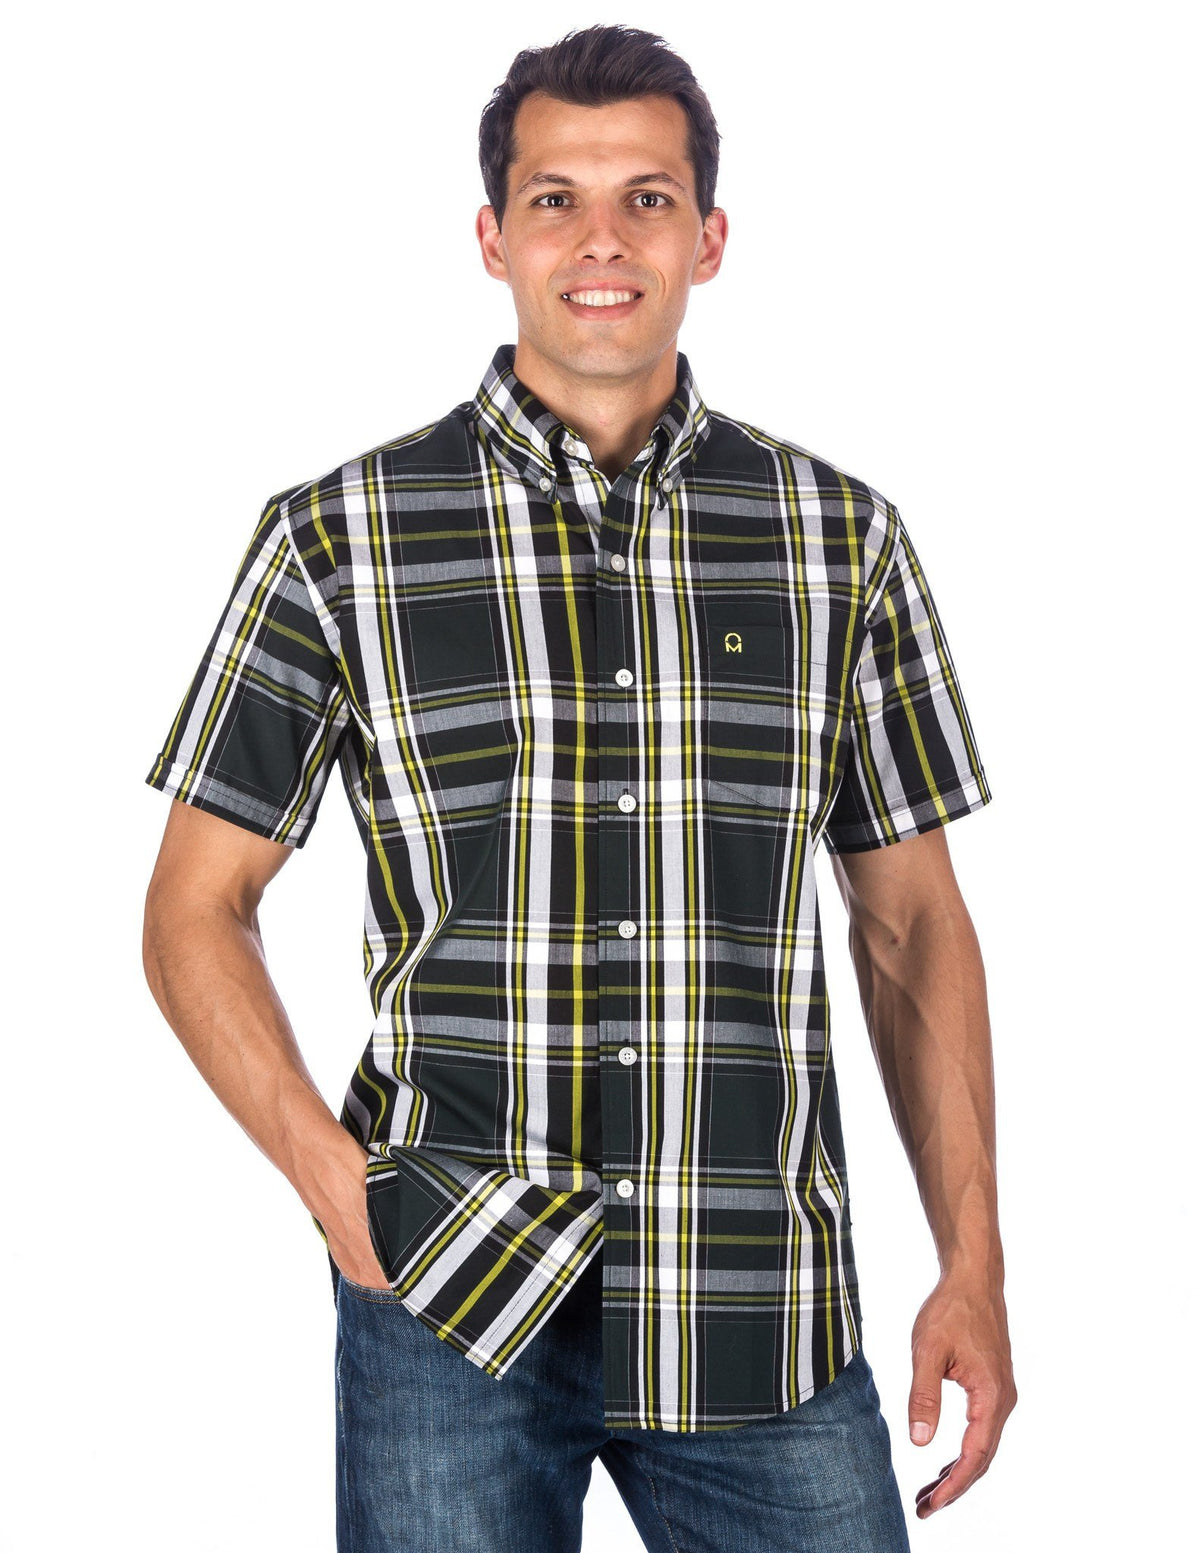 Men's 100% Cotton Casual Short Sleeve Shirt - Regular Fit - Plaid Olive/Green